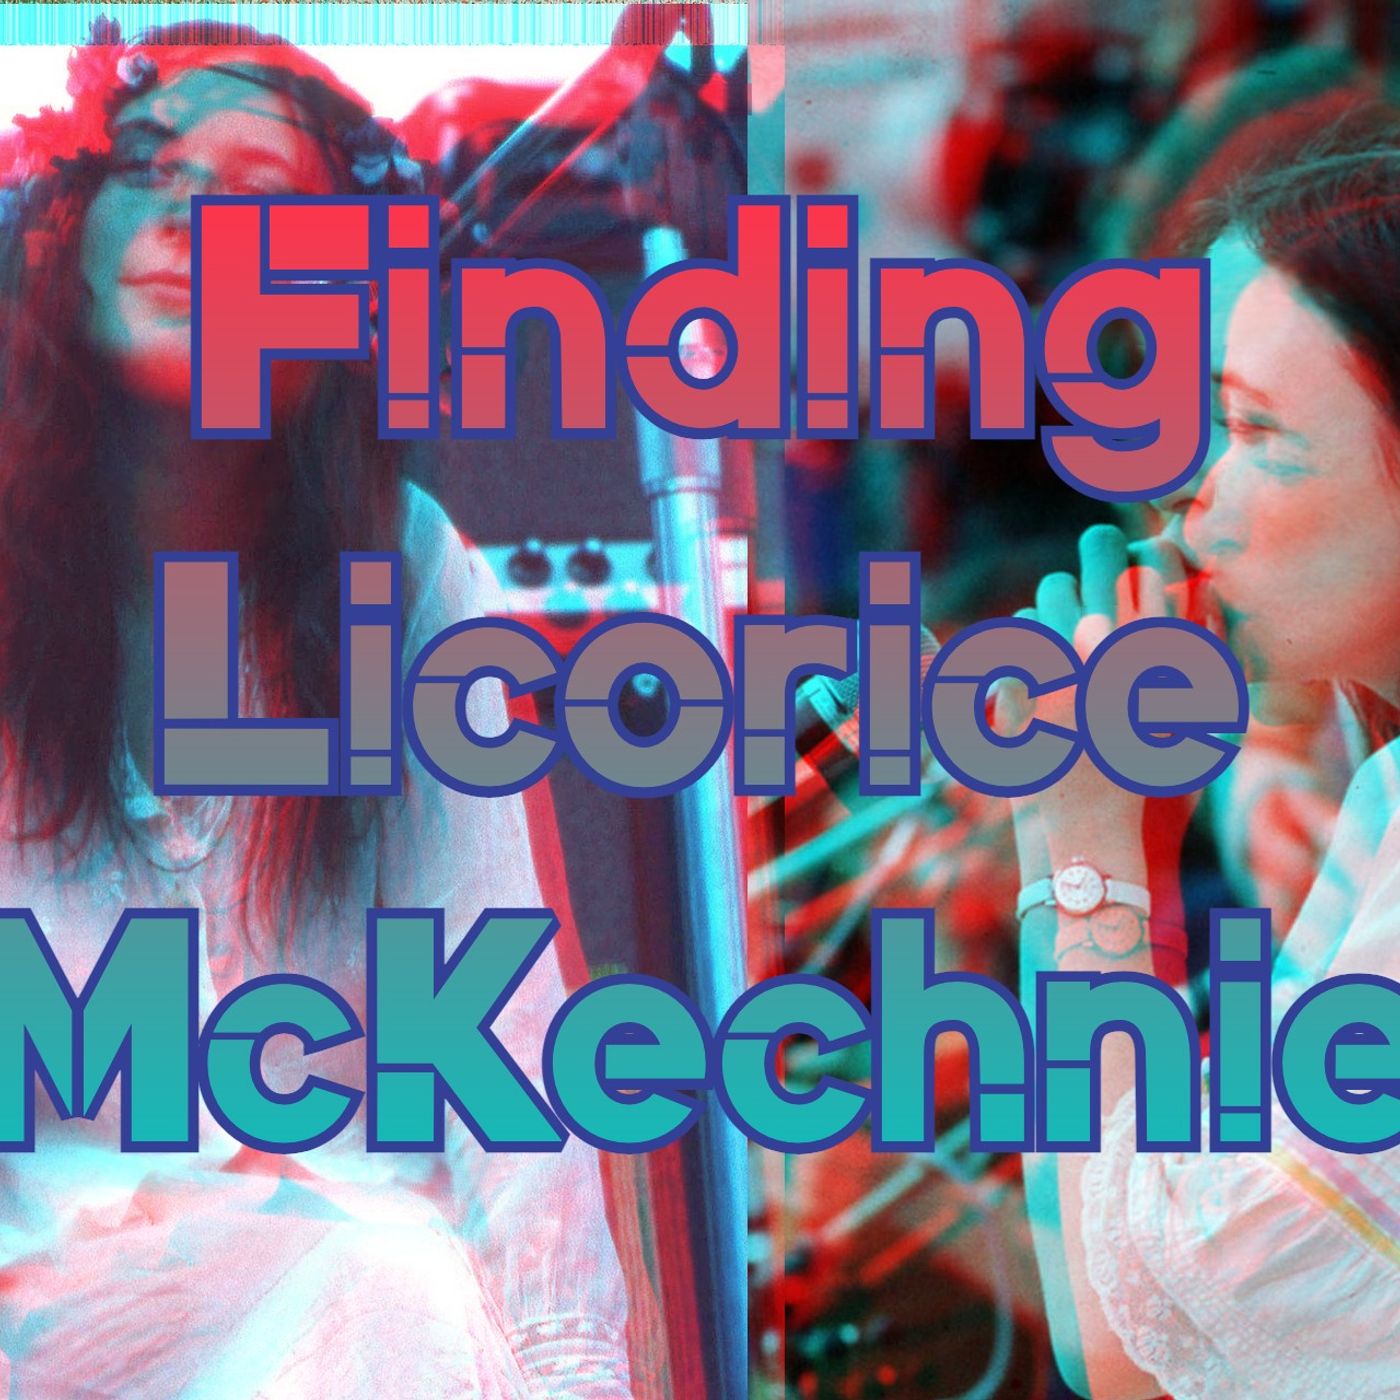 Part III: Finding Licorice McKechnie